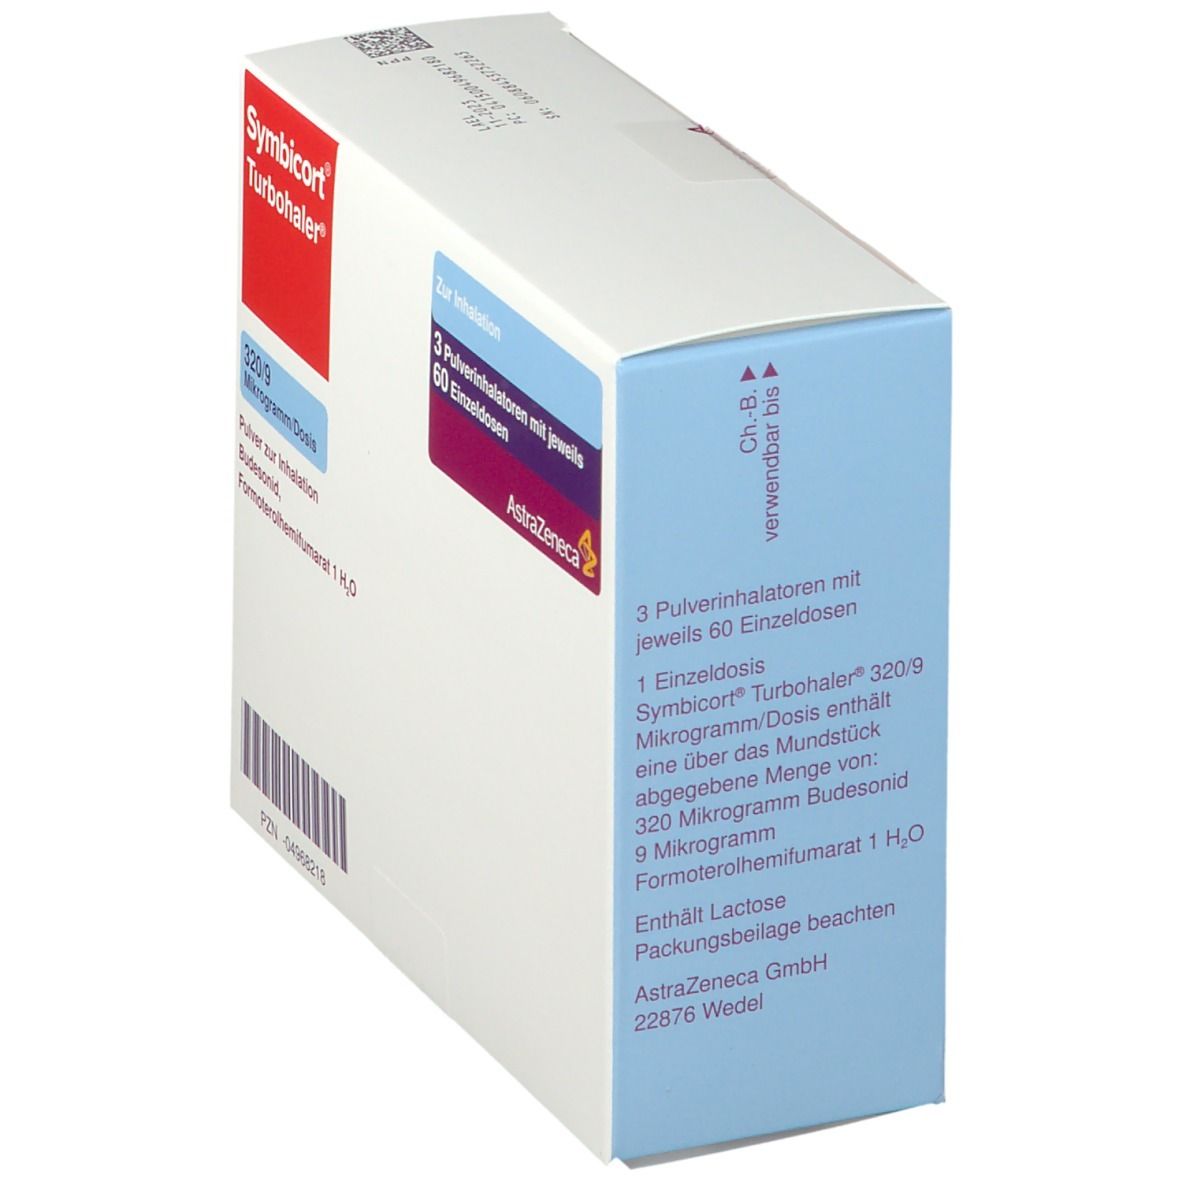 Symbicort® Turbohaler  320/9 µg/Dosis